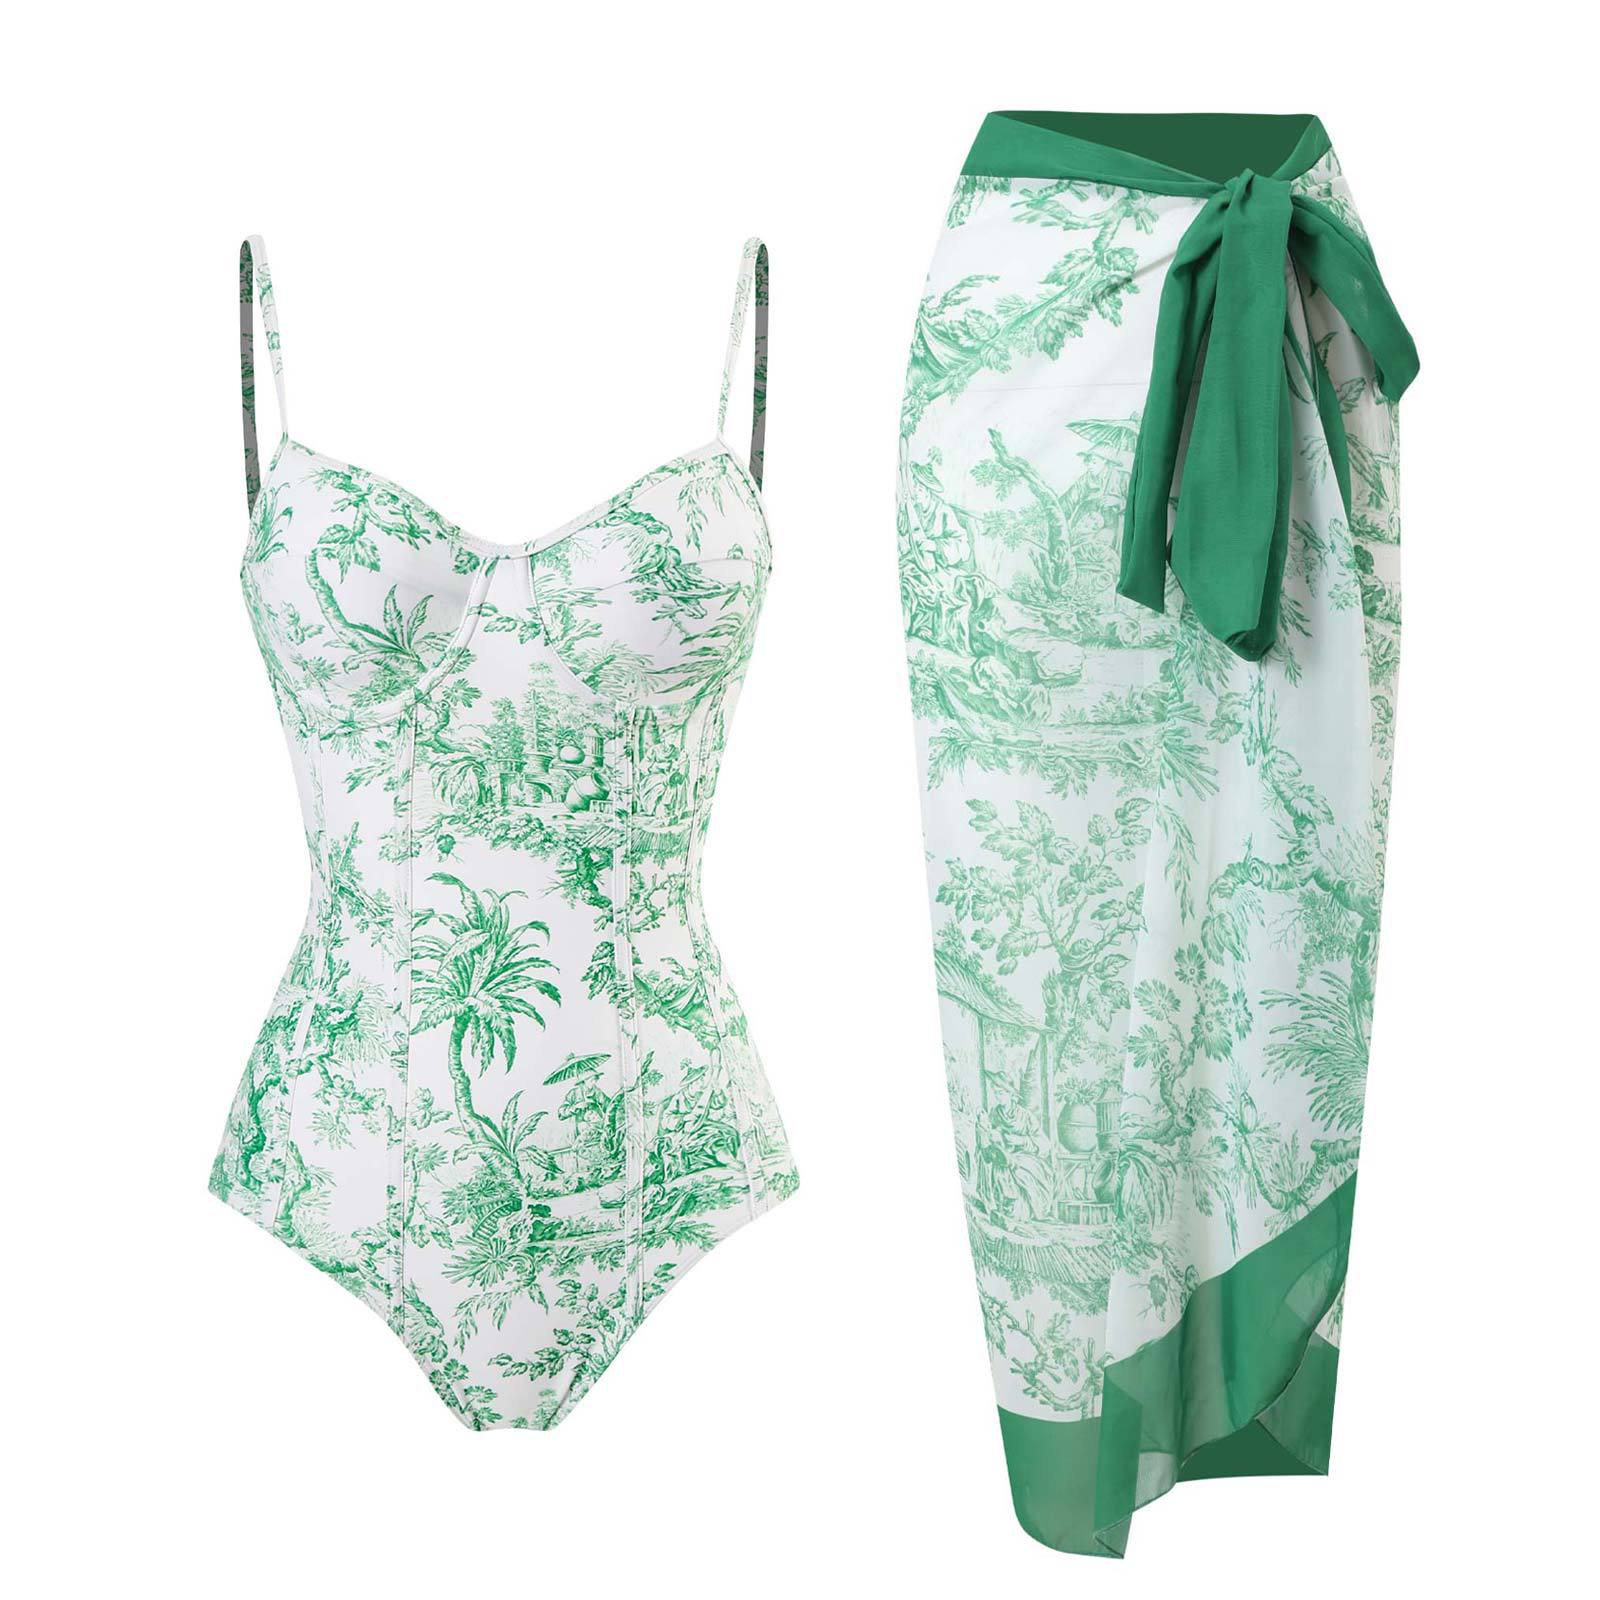 New 2-Piece Women Bikini Set Push Up Floral Printed Ruffle Bikini Strappy Bandage Swimwear Brazilian Biquini Bathing Suit QJY99G4